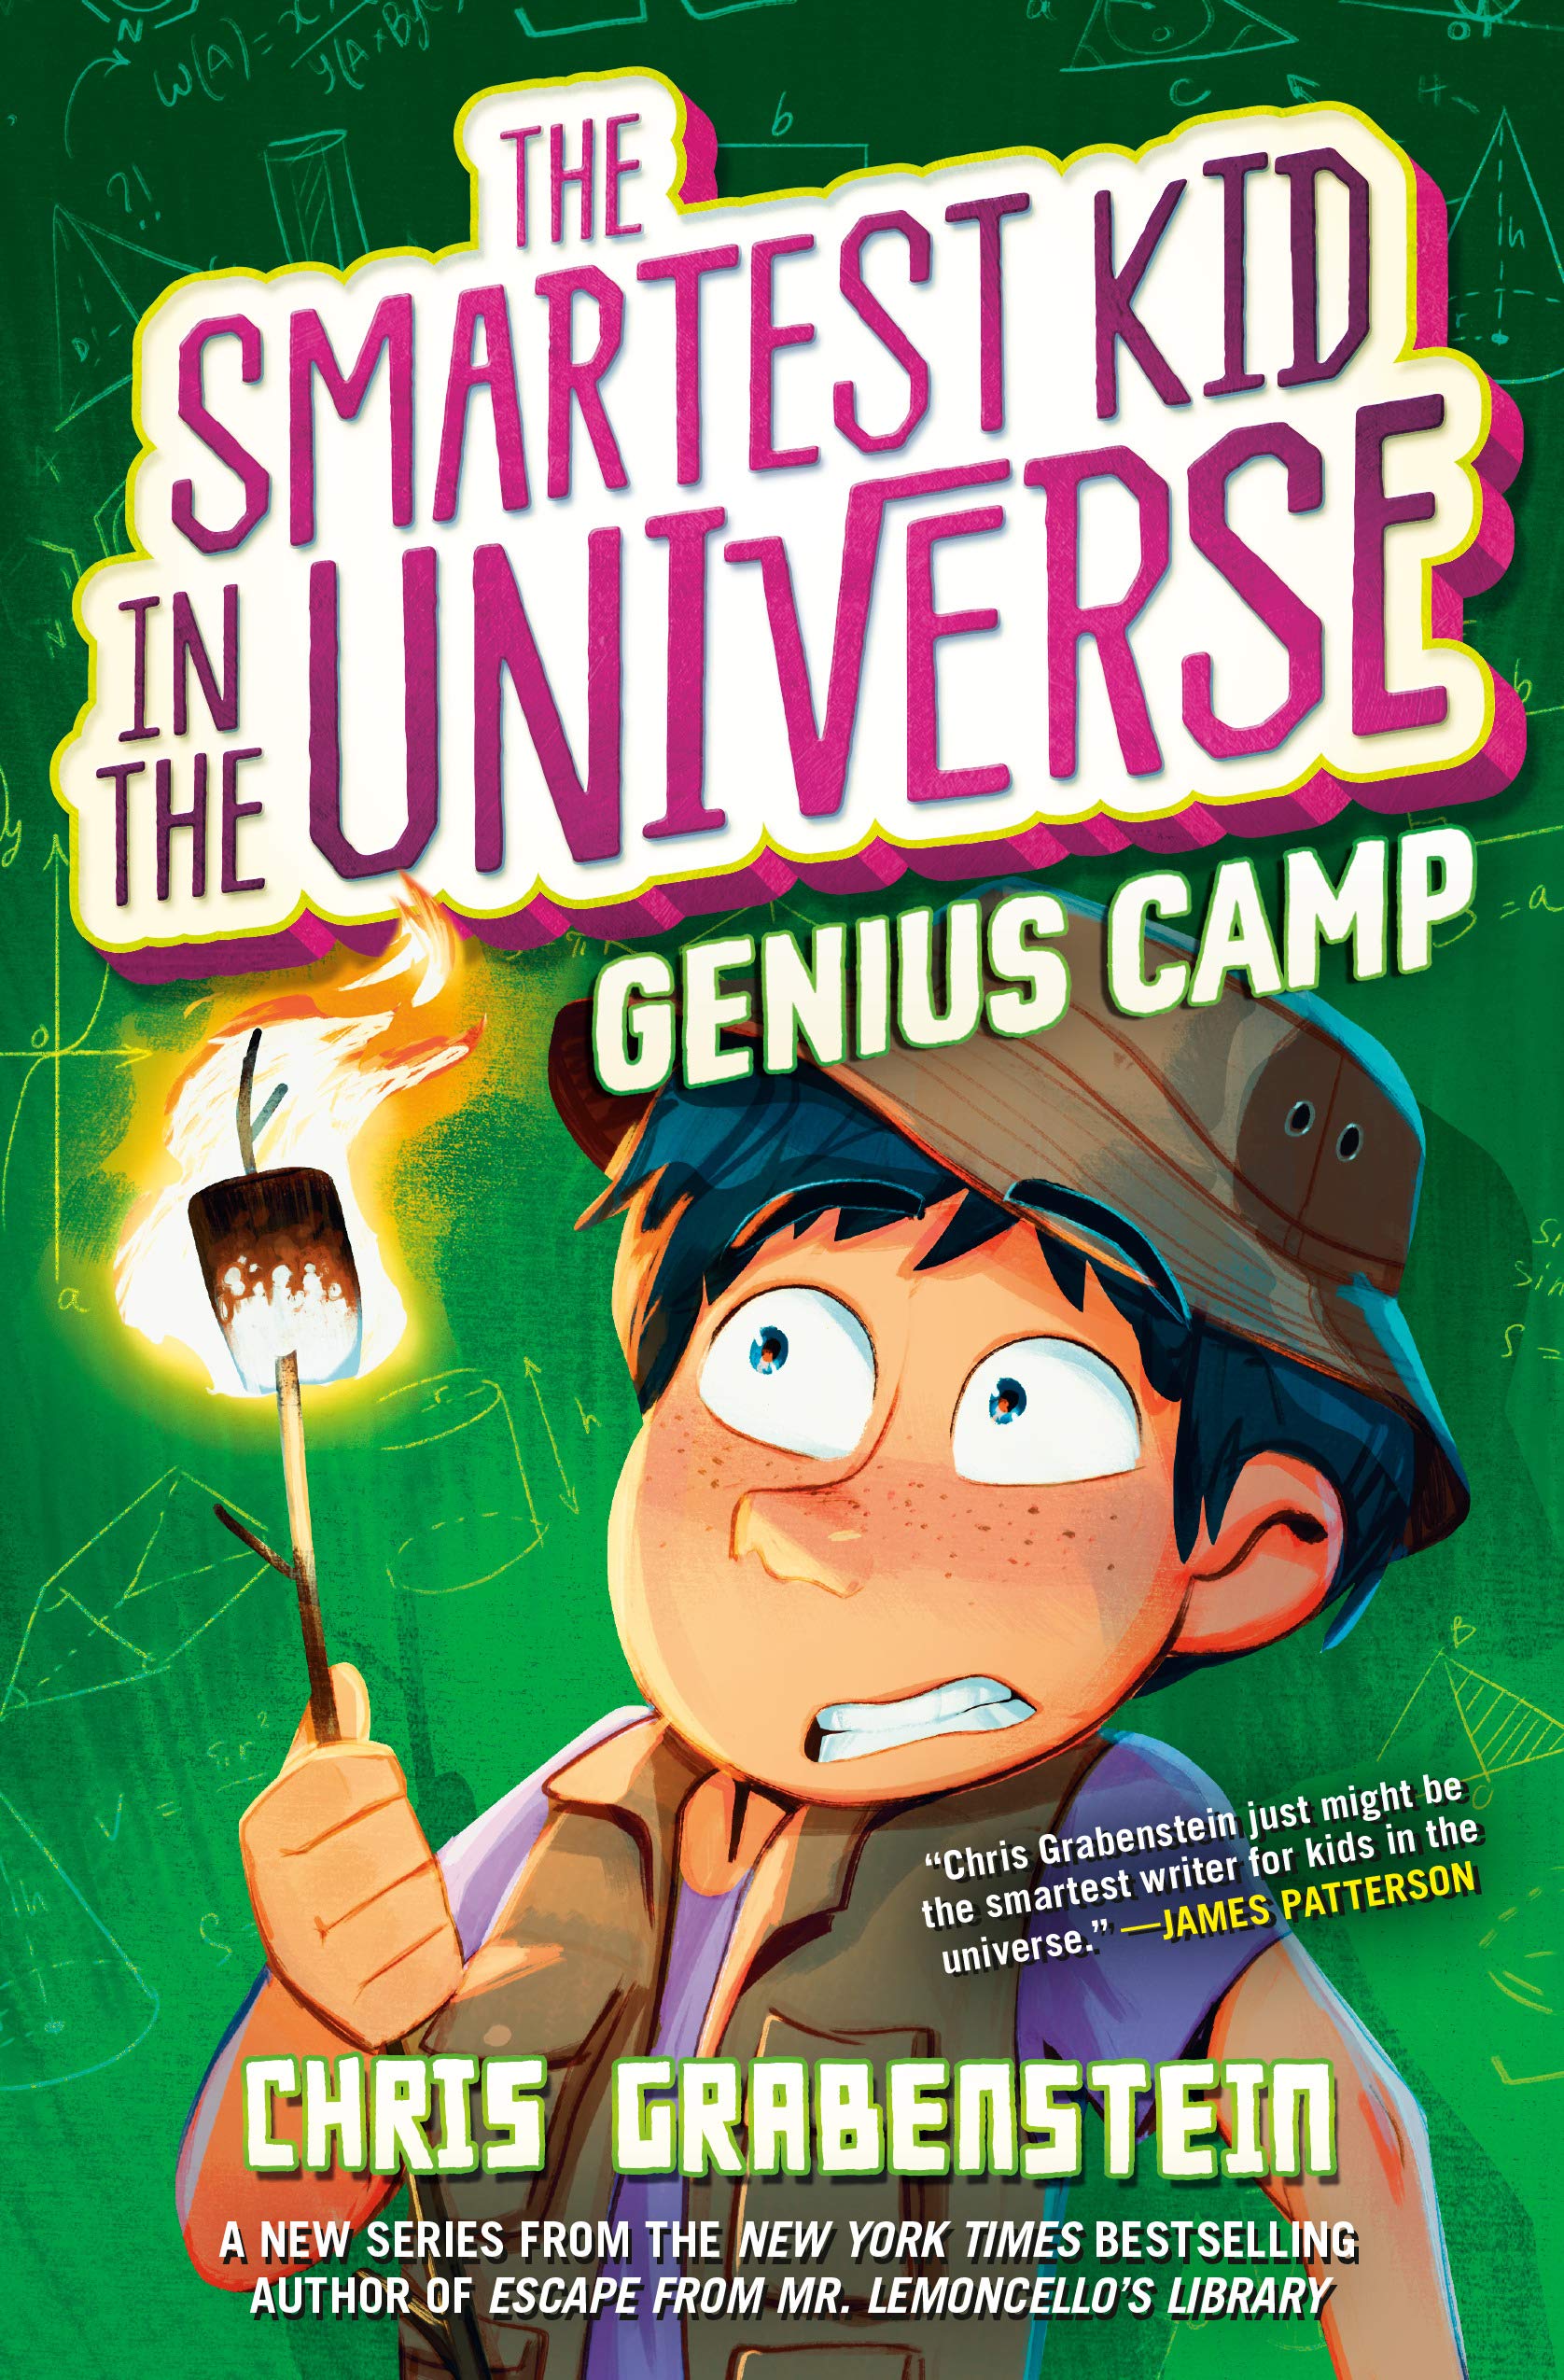 Genius Camp (Smartest Kid in the Universe #2) by Chris Grabenstein